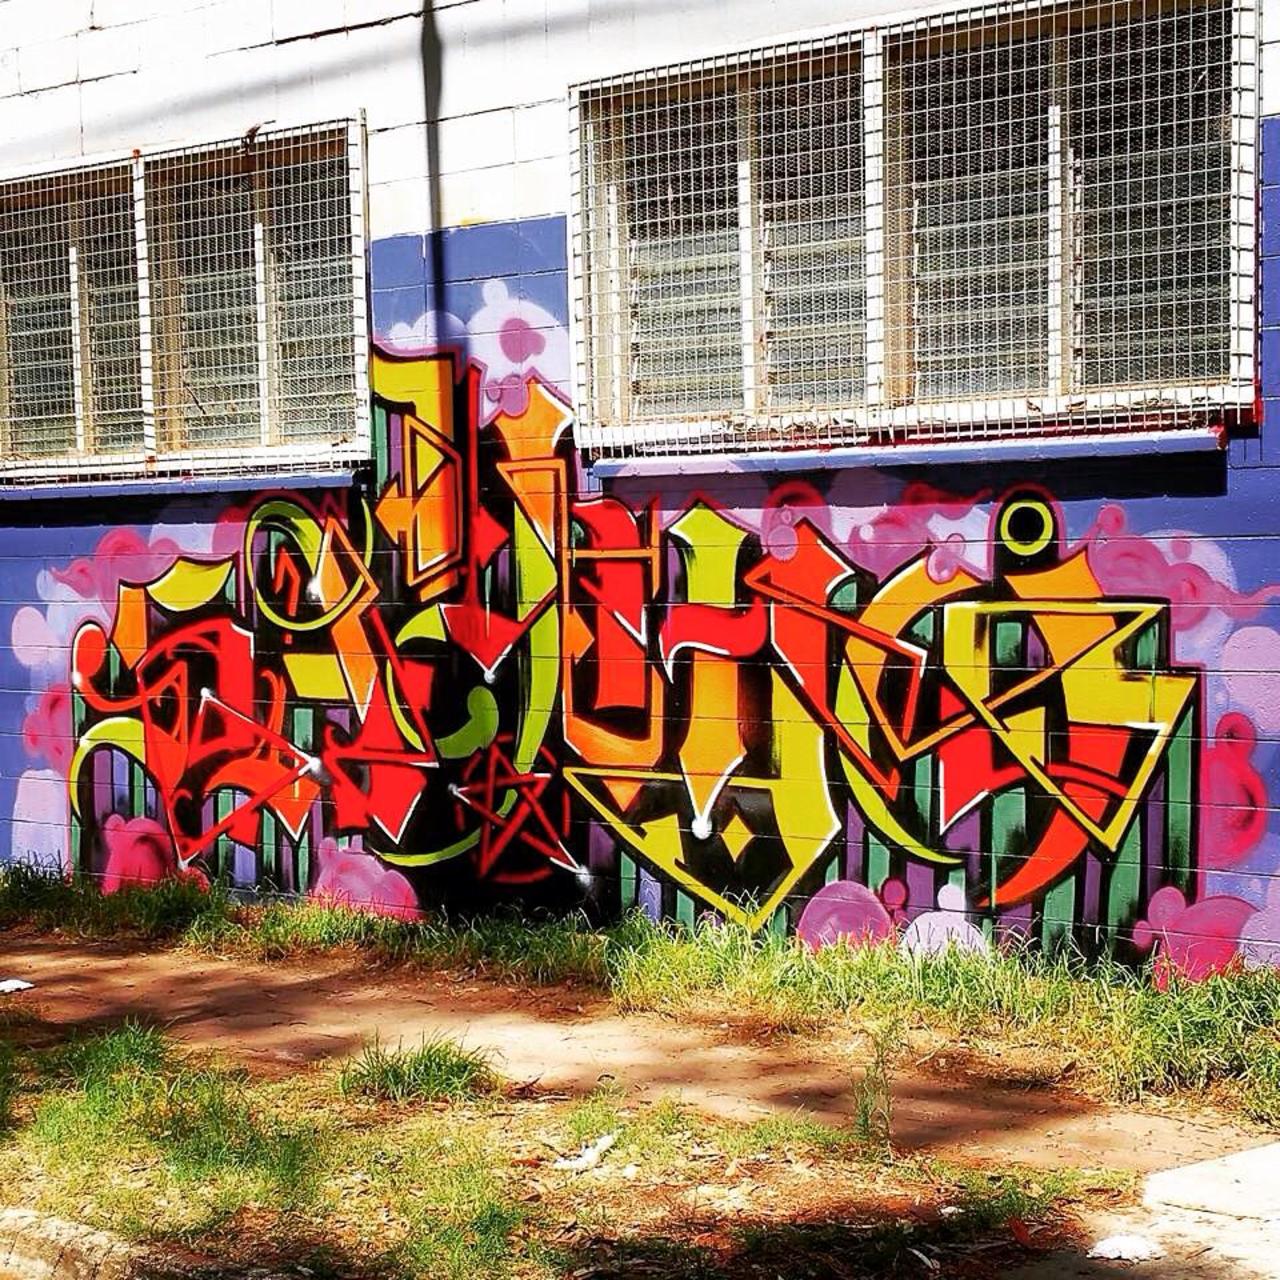 #streetart #graffiti #urbanart #mural #murales http://t.co/d60i5y5JOH